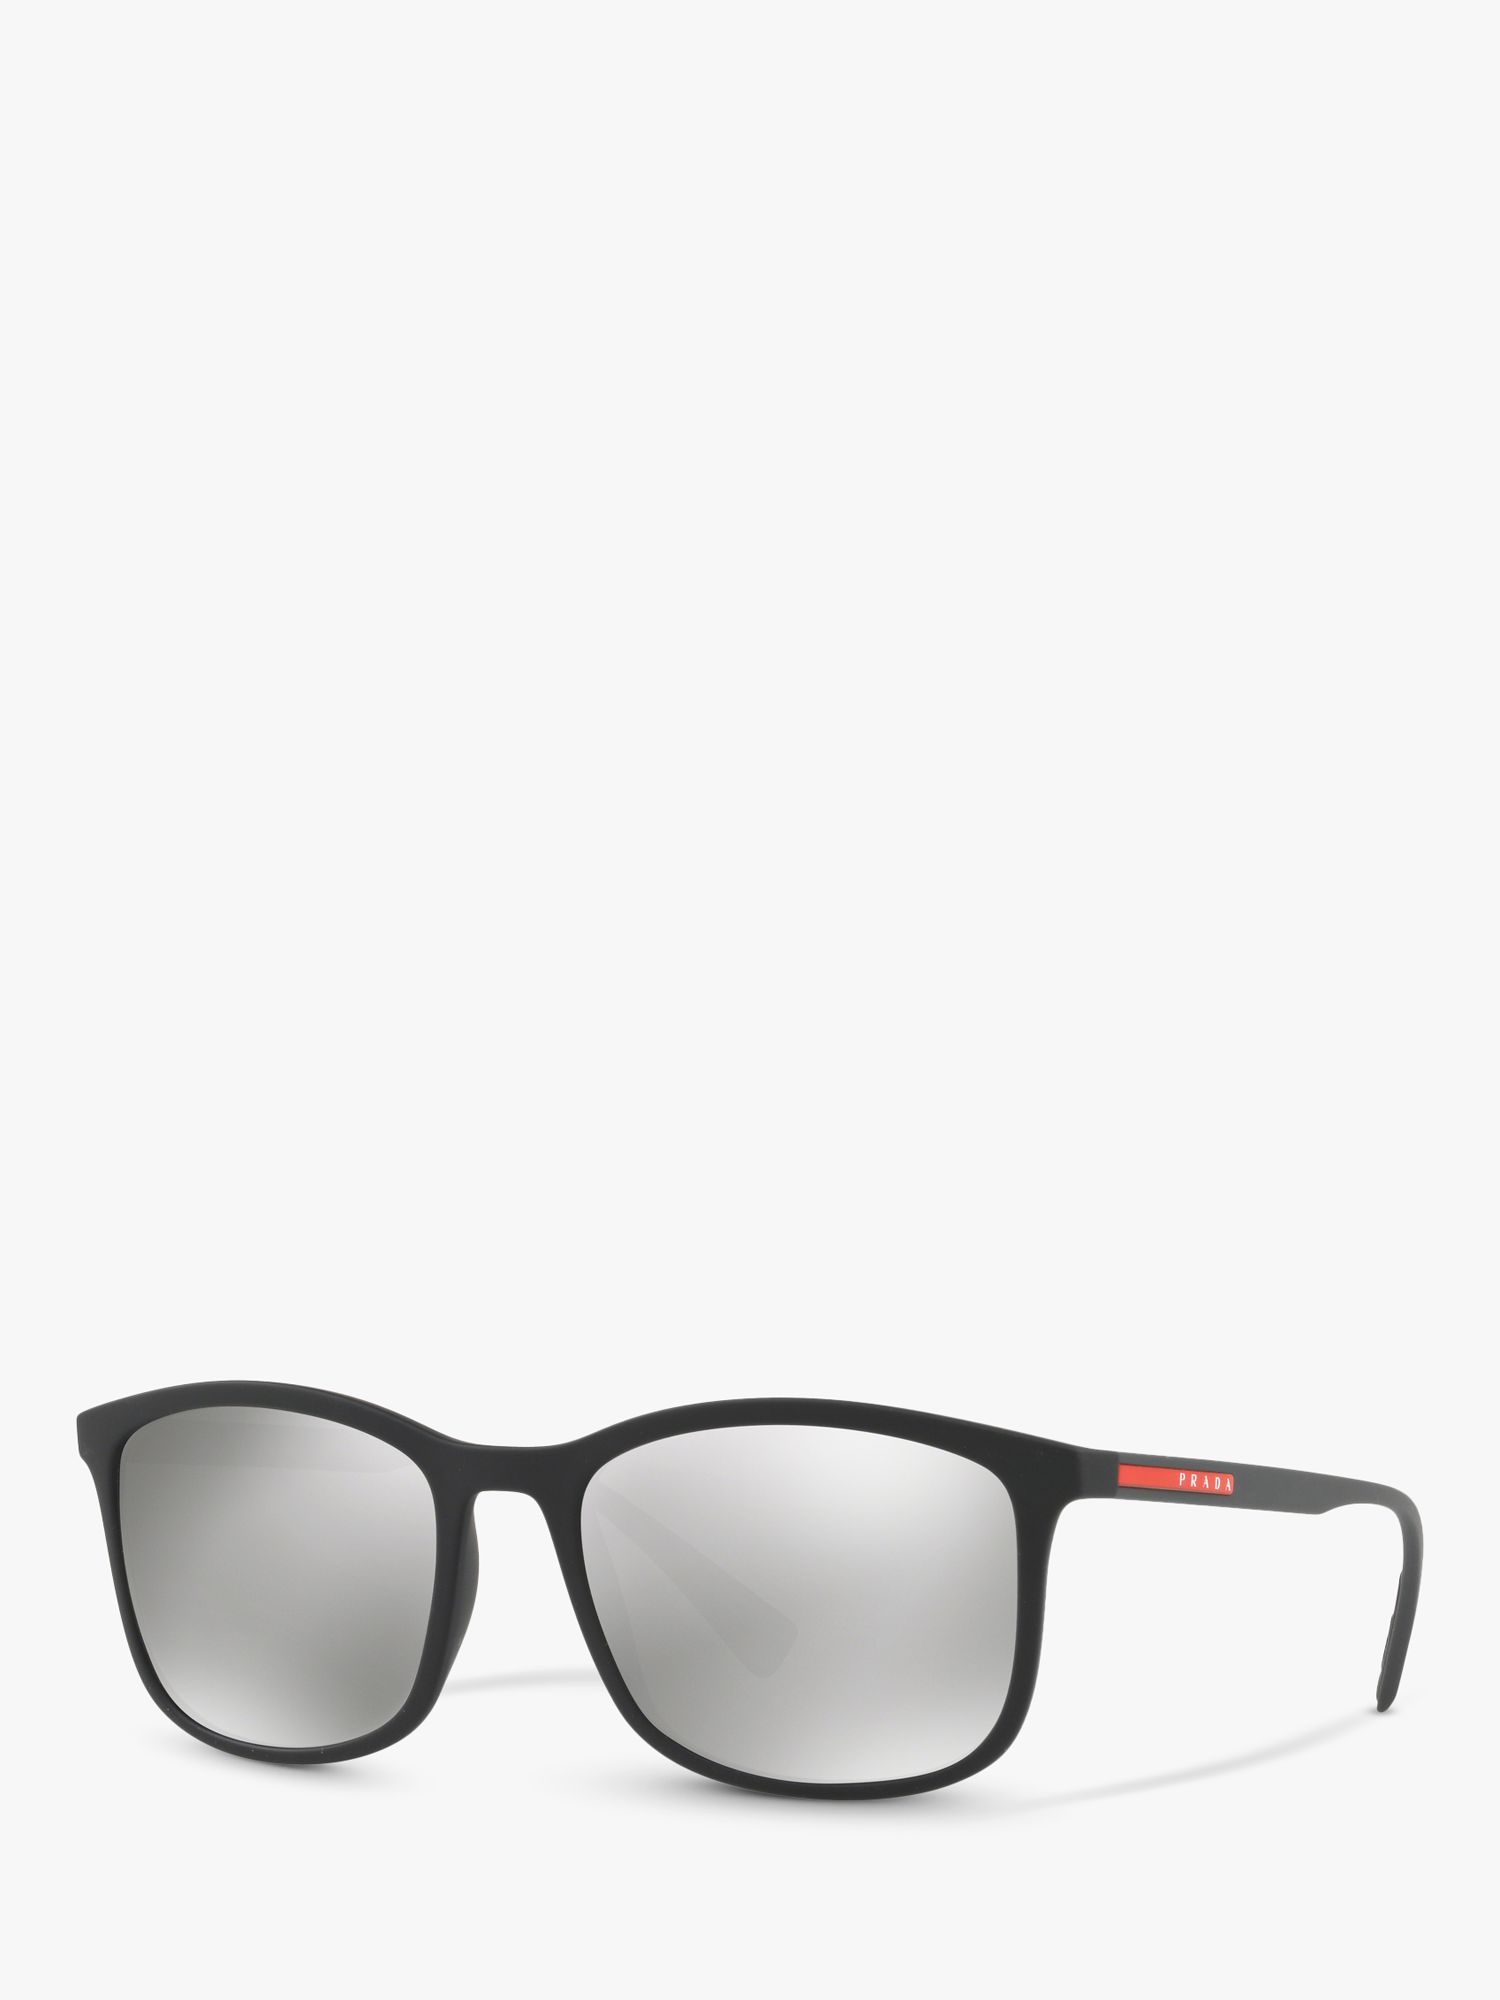 Prada Linea Rossa PS 01TS Men's Rectangular Sunglasses, Black/Mirror Grey  at John Lewis u0026 Partners